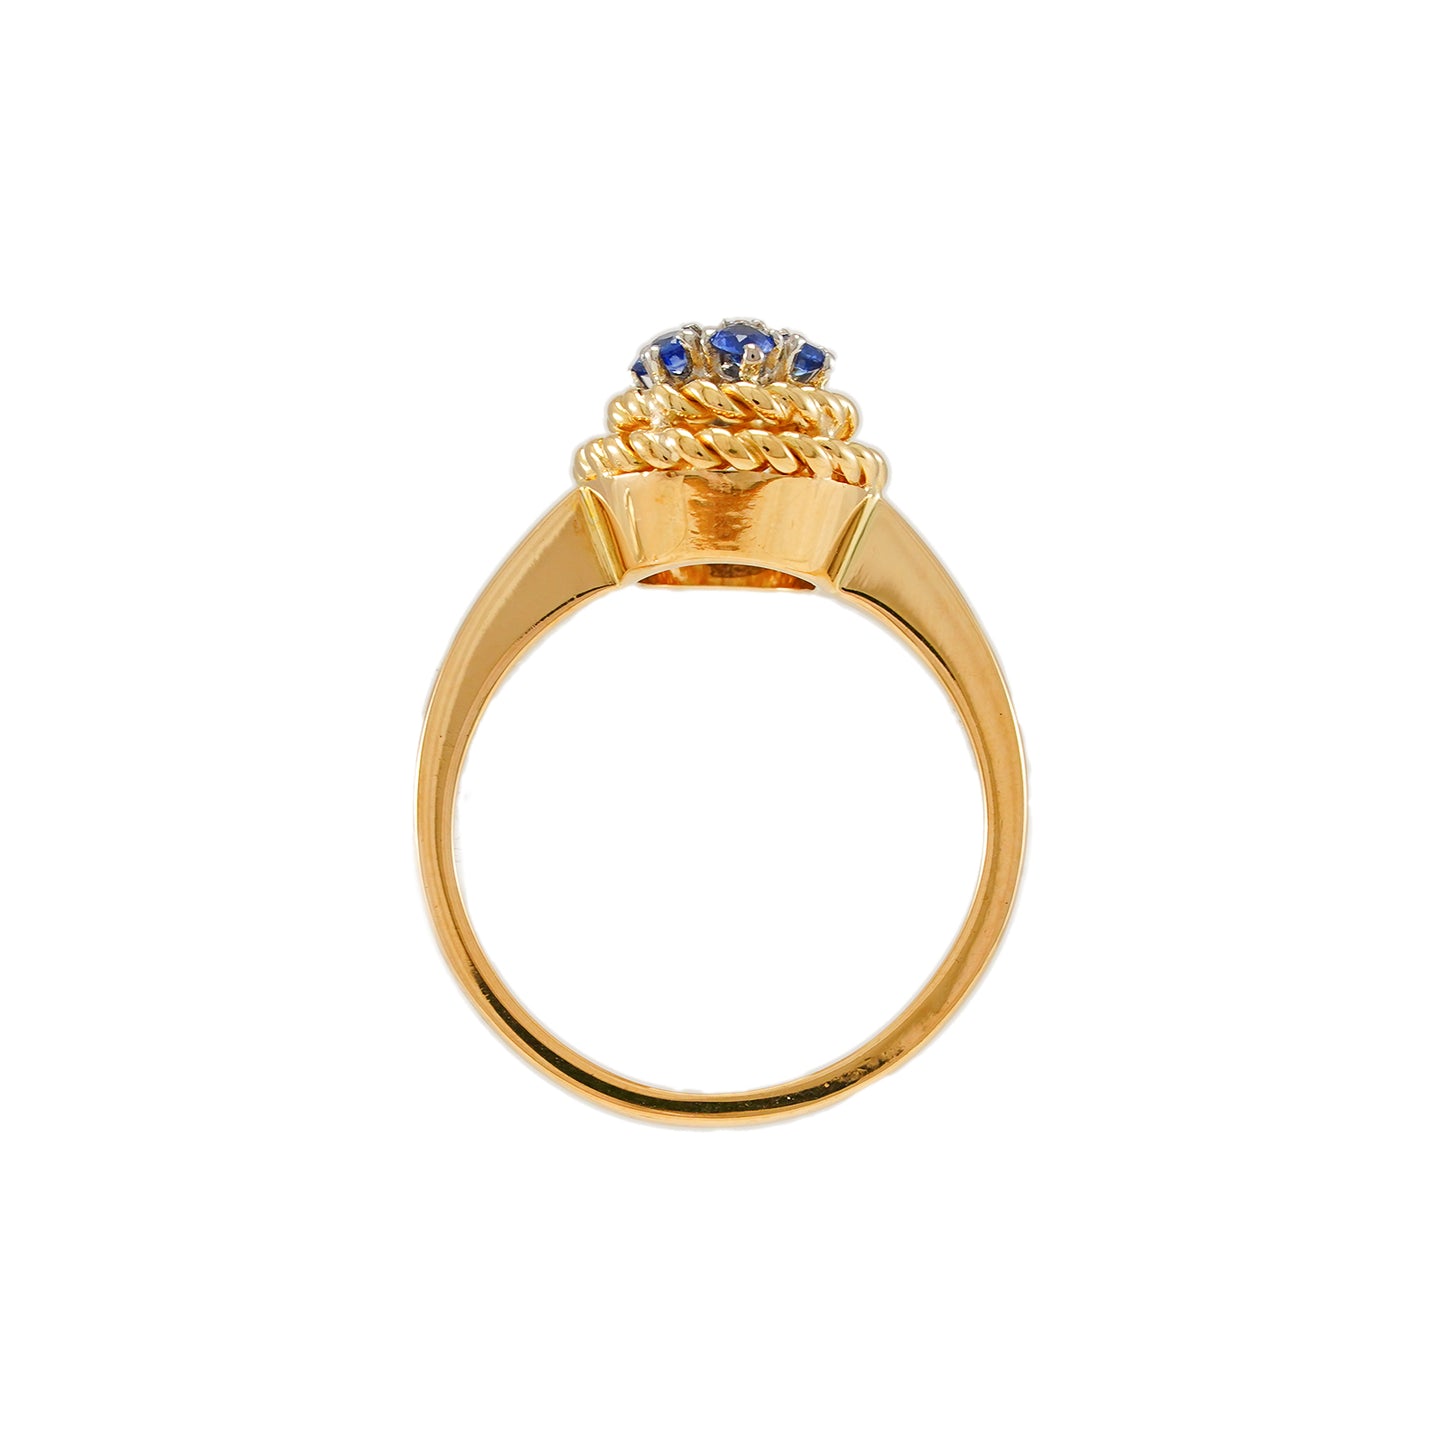 Vintage Gemstone Ring Spinel Diamond Yellow Gold 18K Women's Jewelry Gold Ring